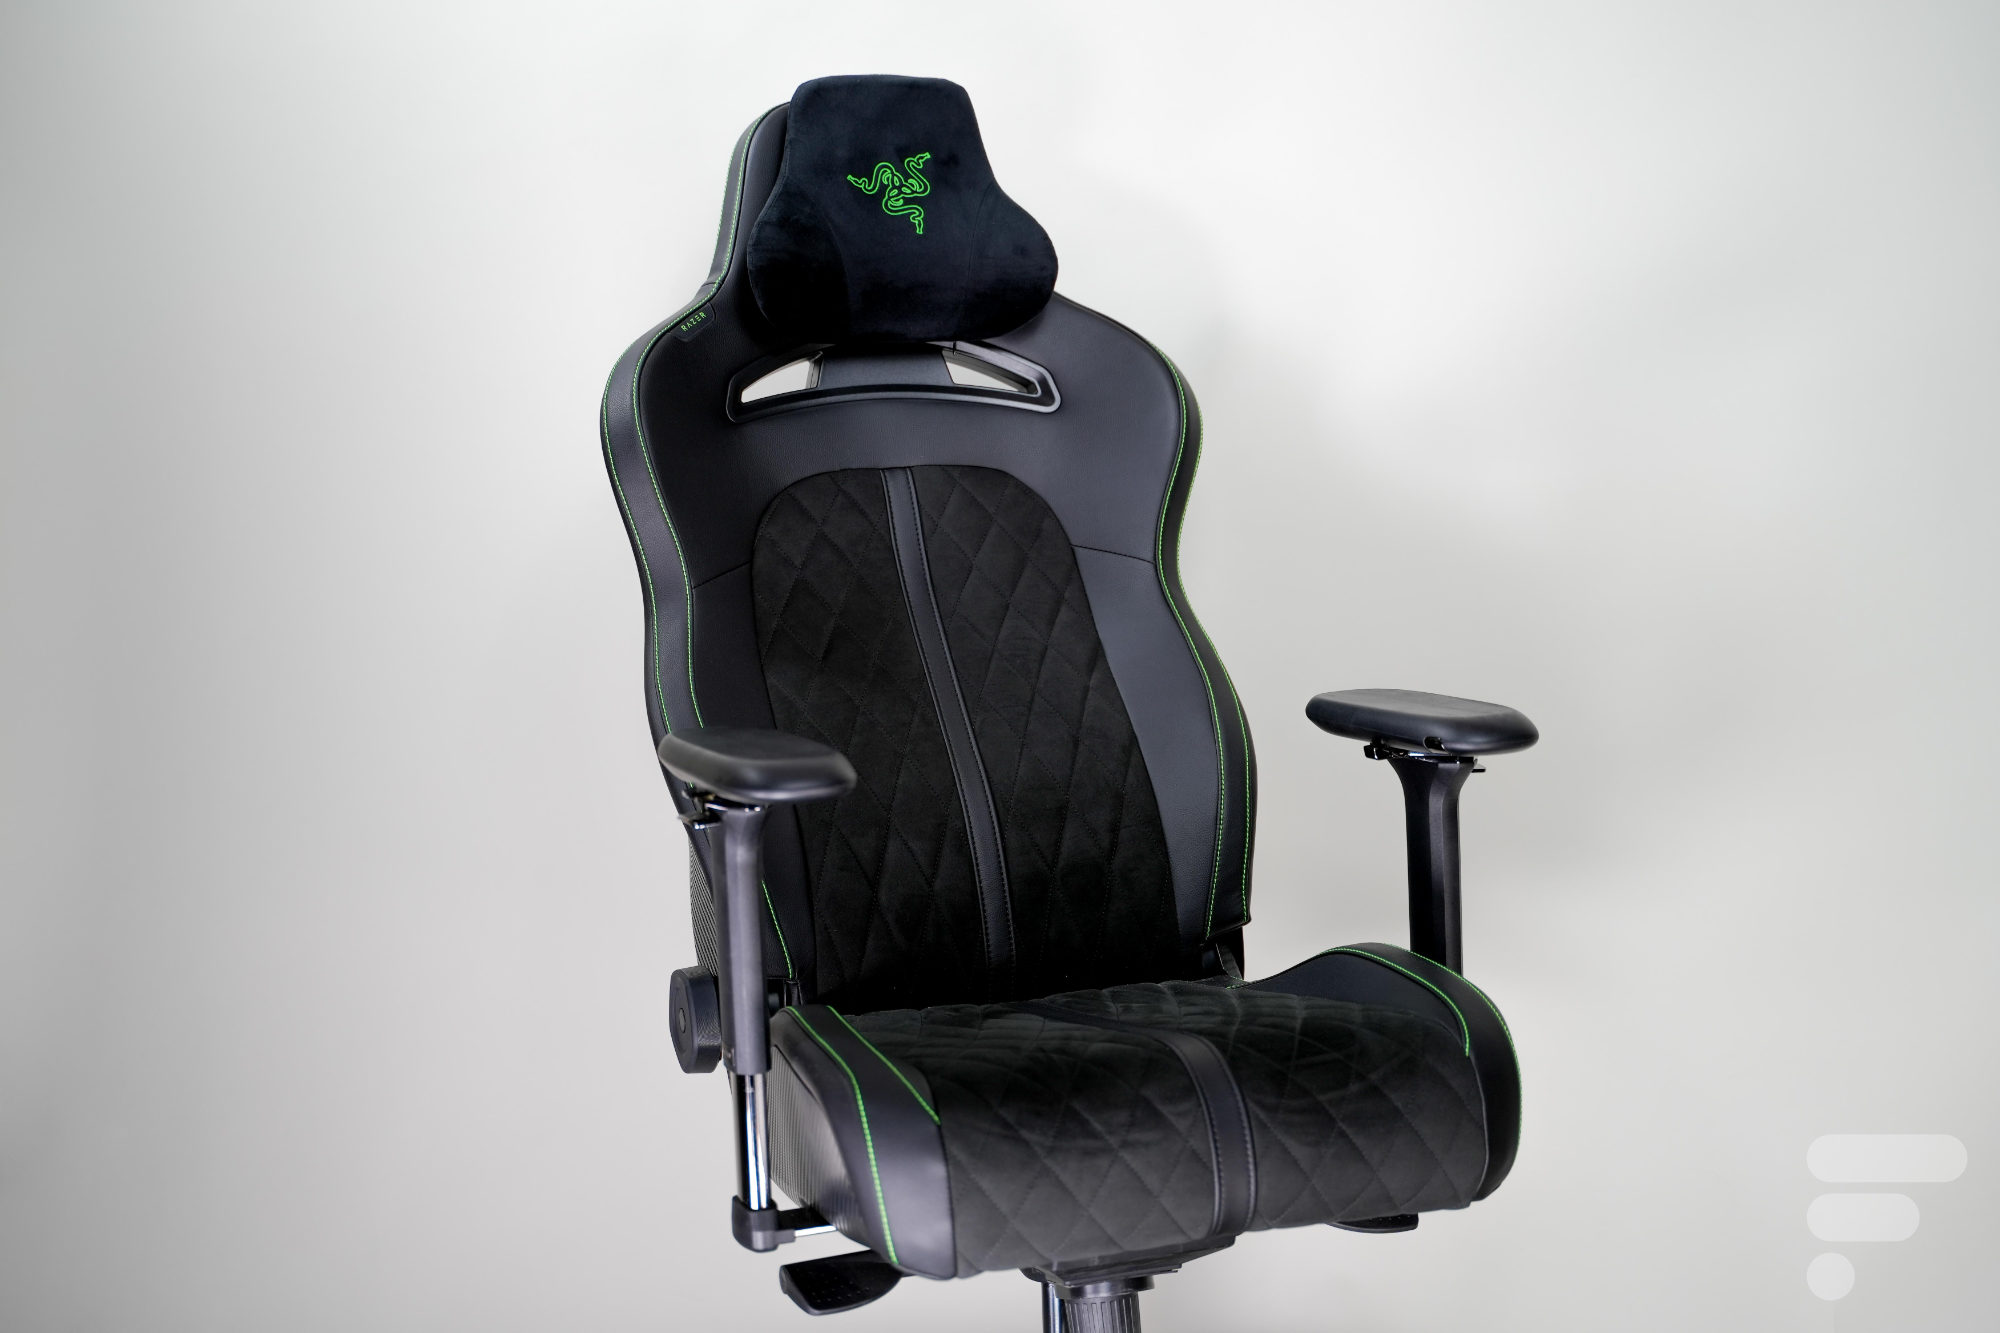 Chaise de bureau gaming Razer Tarok Pro X Edition Tissu Noir et vert -  Chaise gaming - Achat & prix